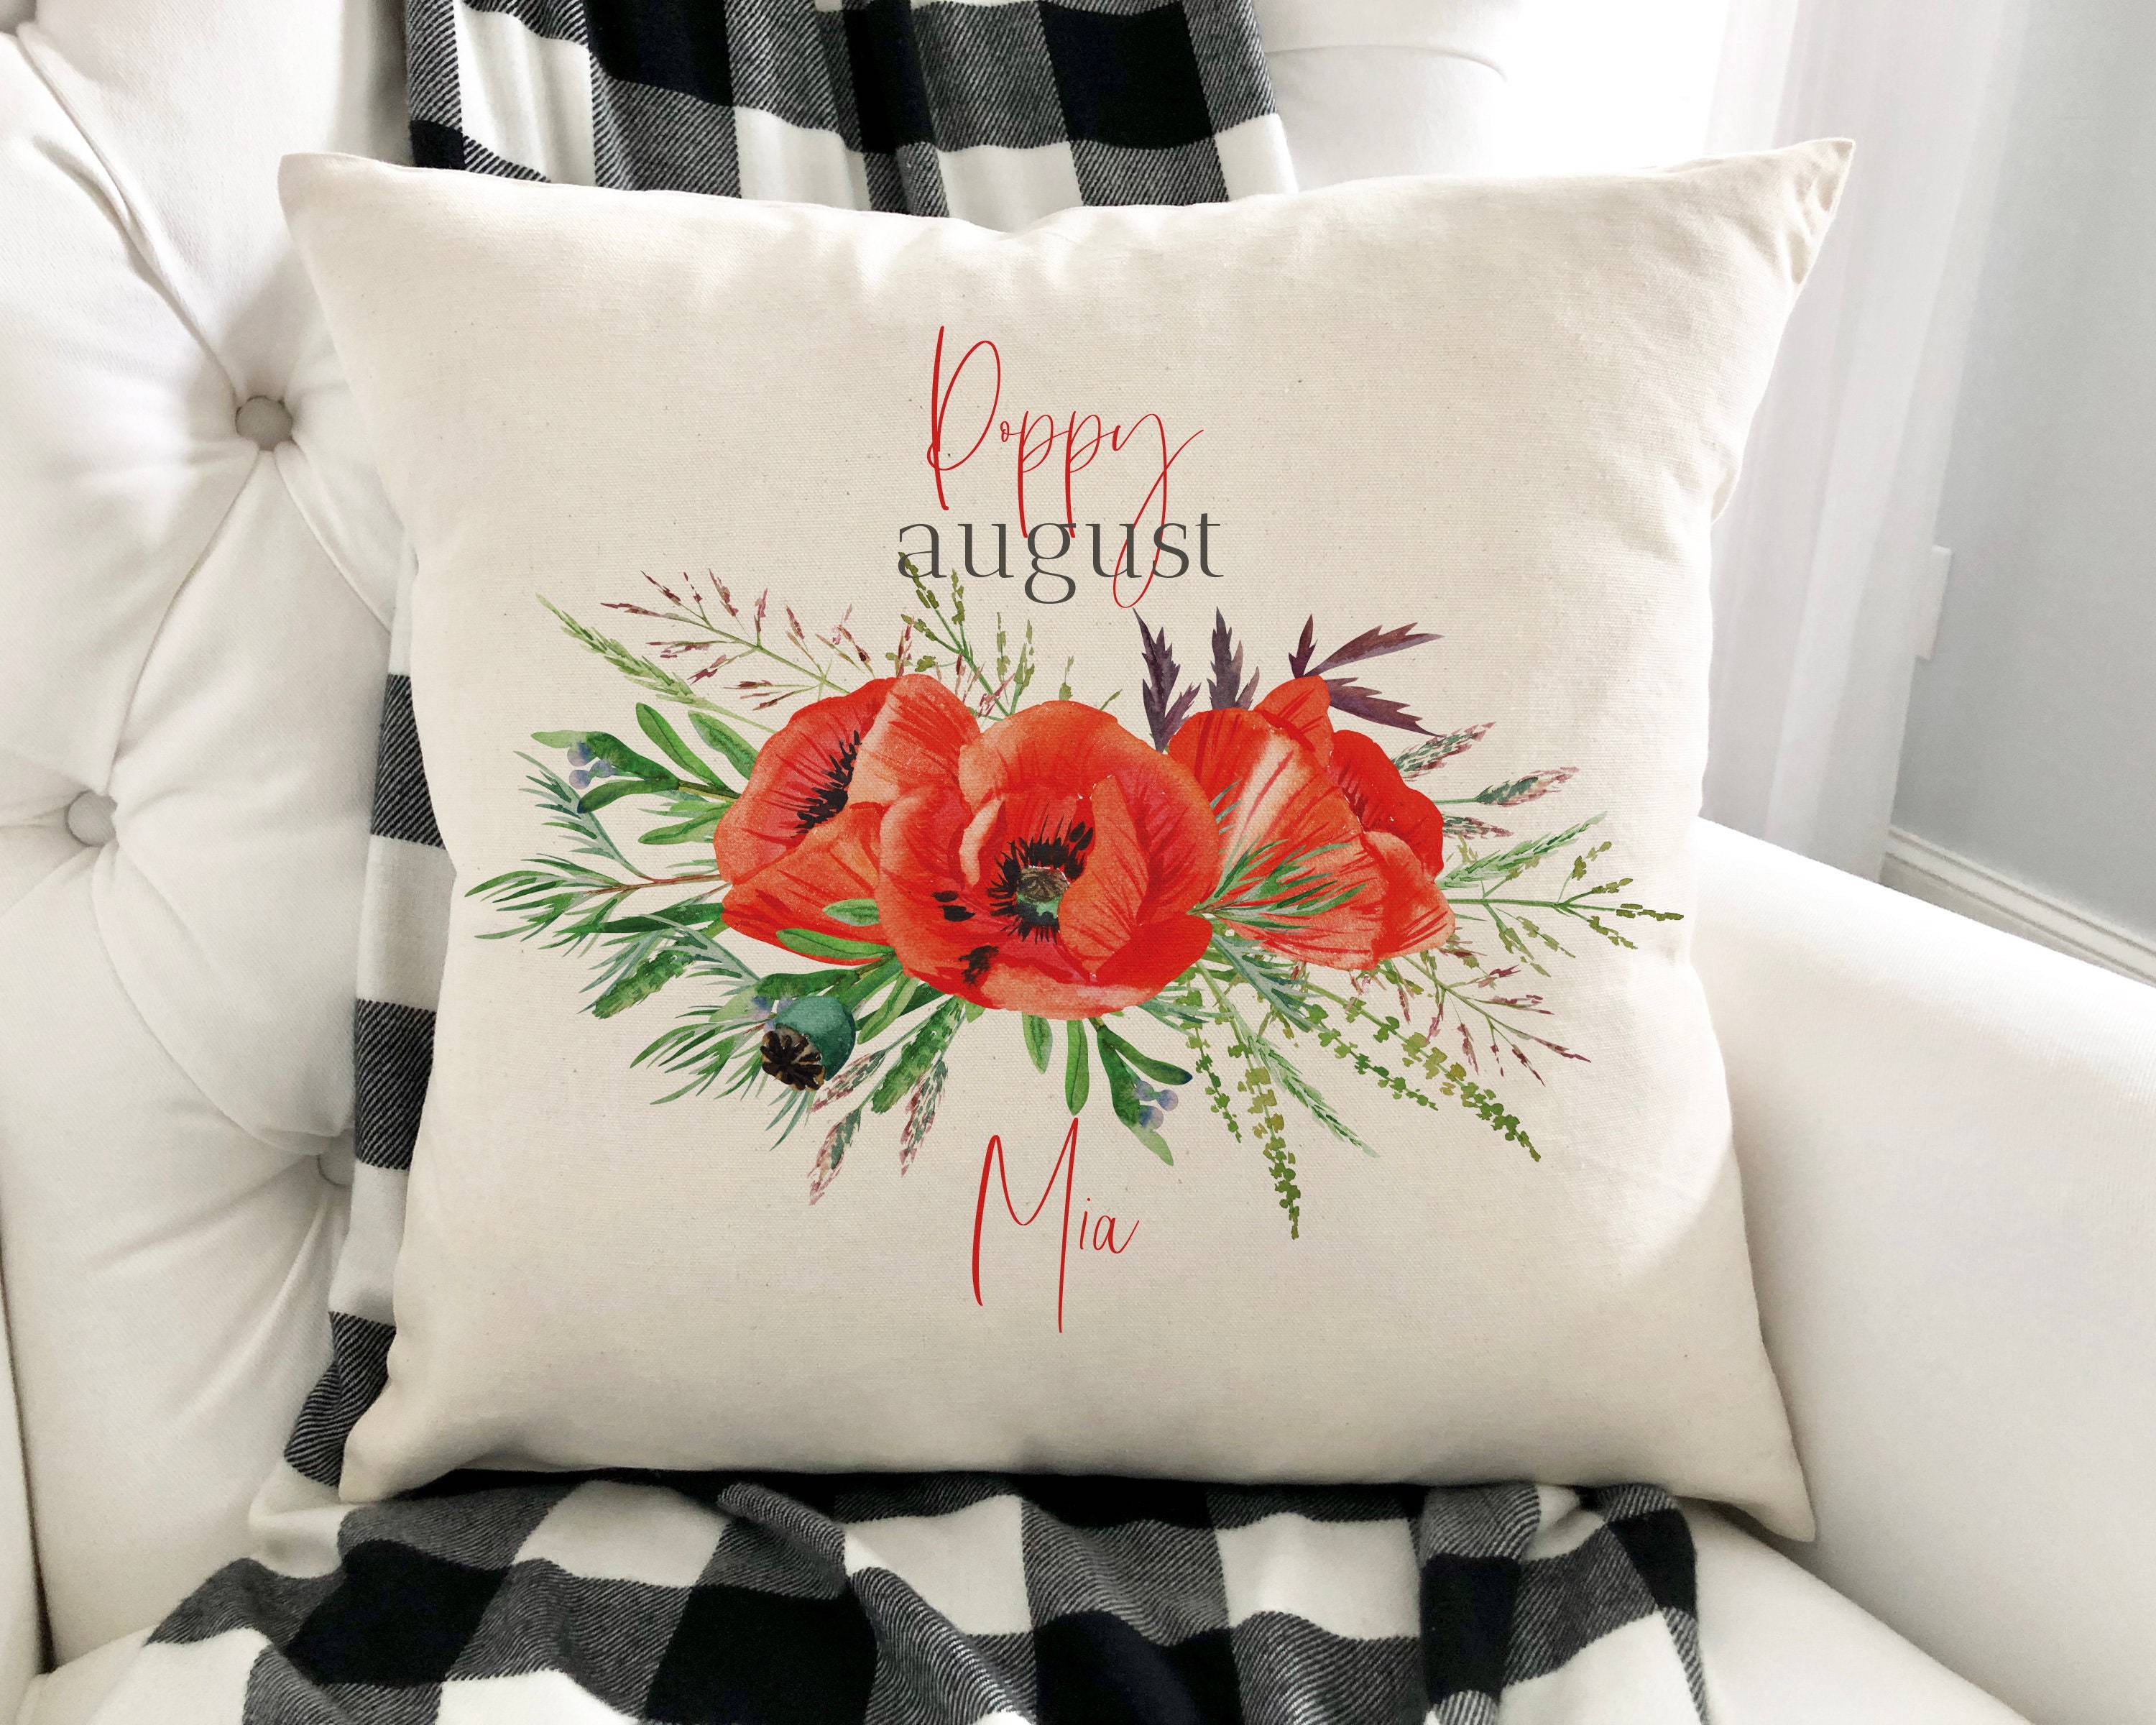 Personalised birth flower cushion, August birth flower poppy, Floral design birthday gift